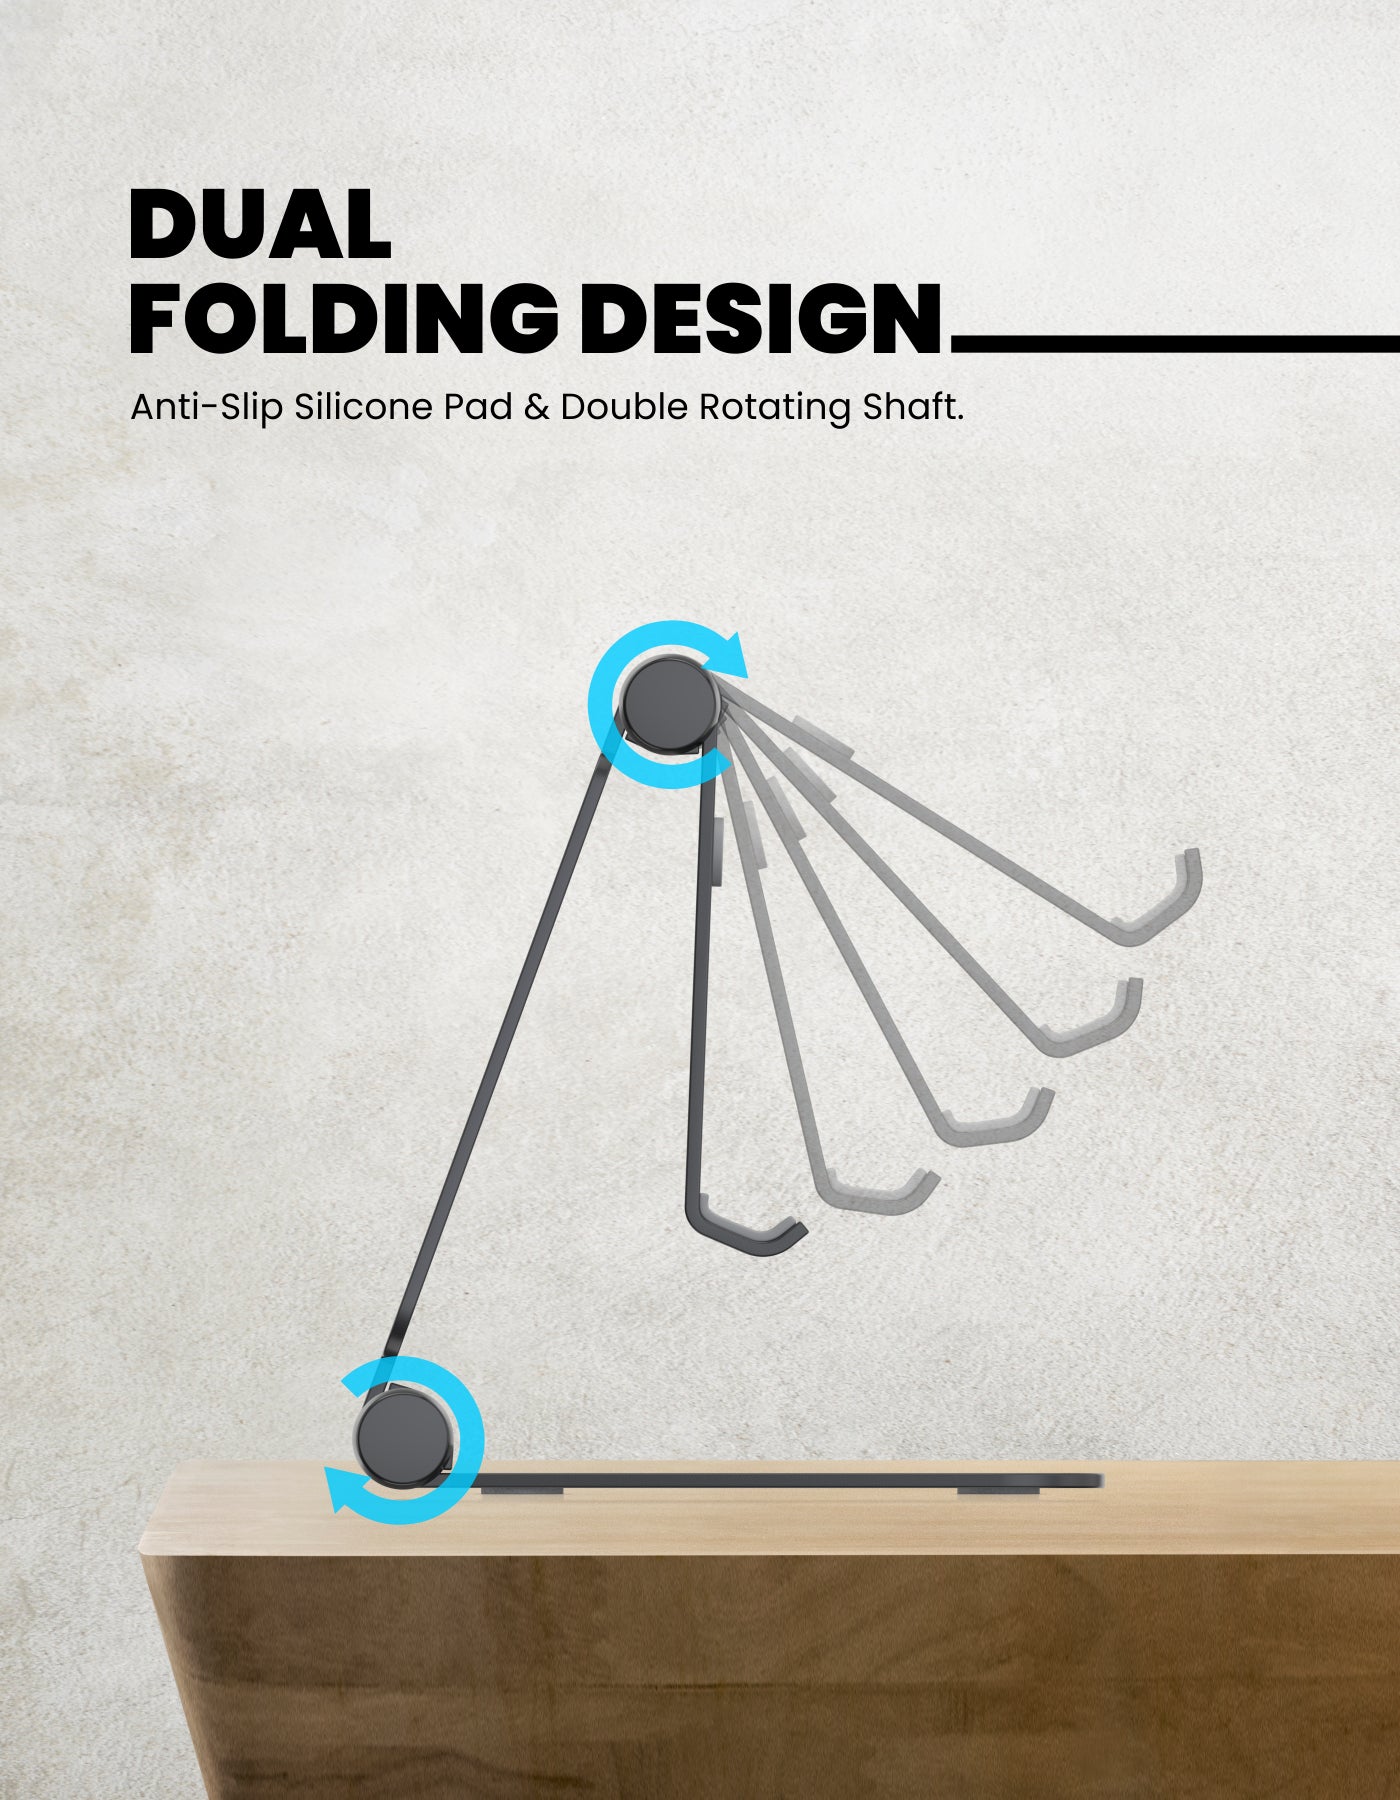 Portronics Modesk Flex Universal Mobile Stand dual folding anti skid 